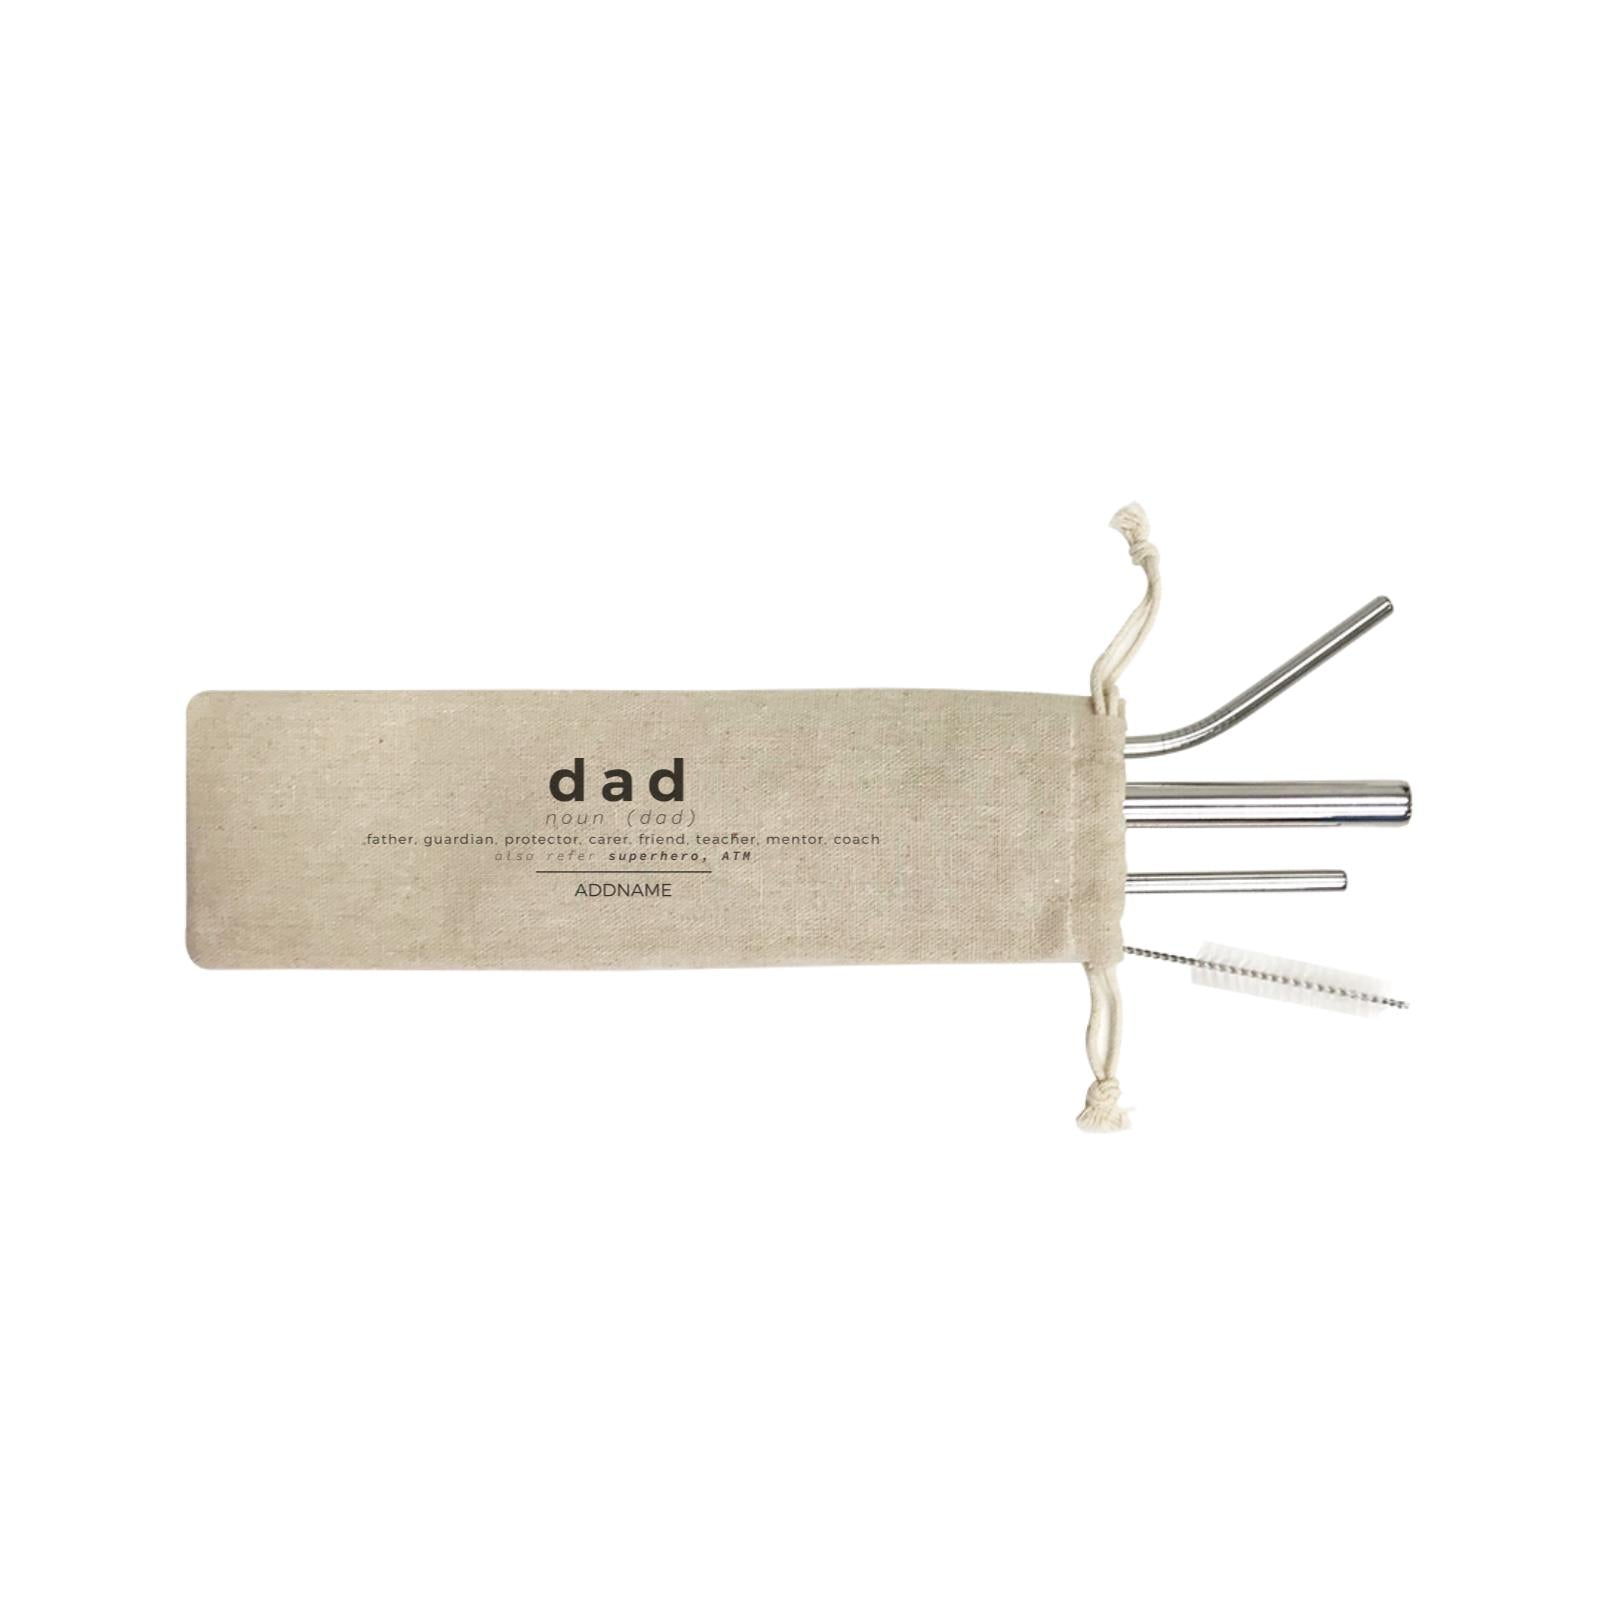 Dad Definition Dad Noun Definition Addname SB 4-In-1 Stainless Steel Straw Set in Satchel